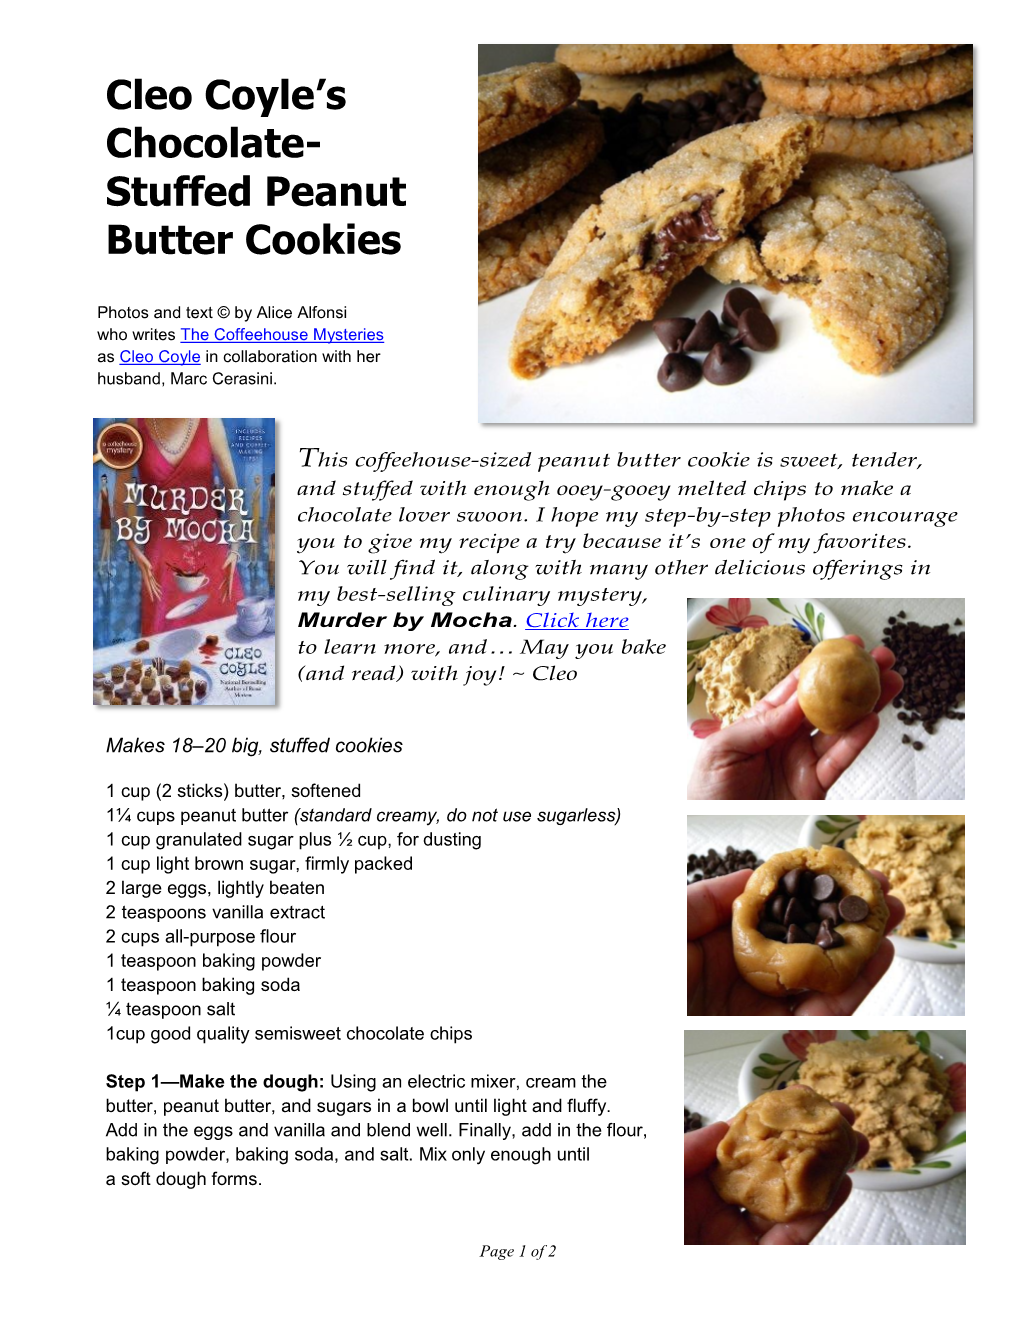 Chocolate-Stuffed Peanut Butter Cookies